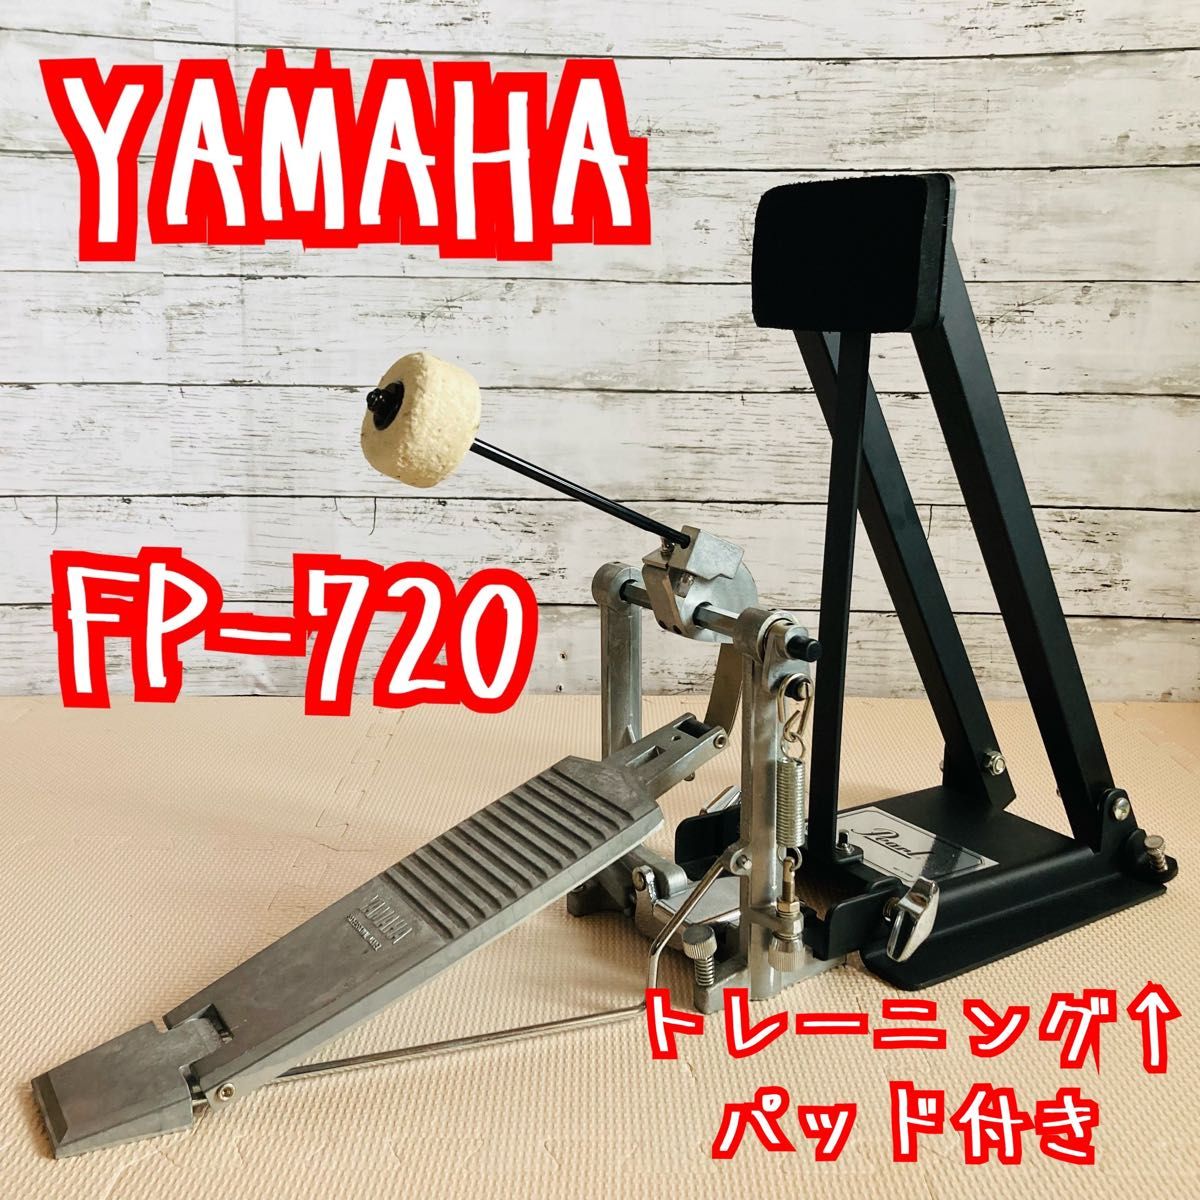 YAMAHA FP-720 ドラム シングルペダル + Pearl BD-10